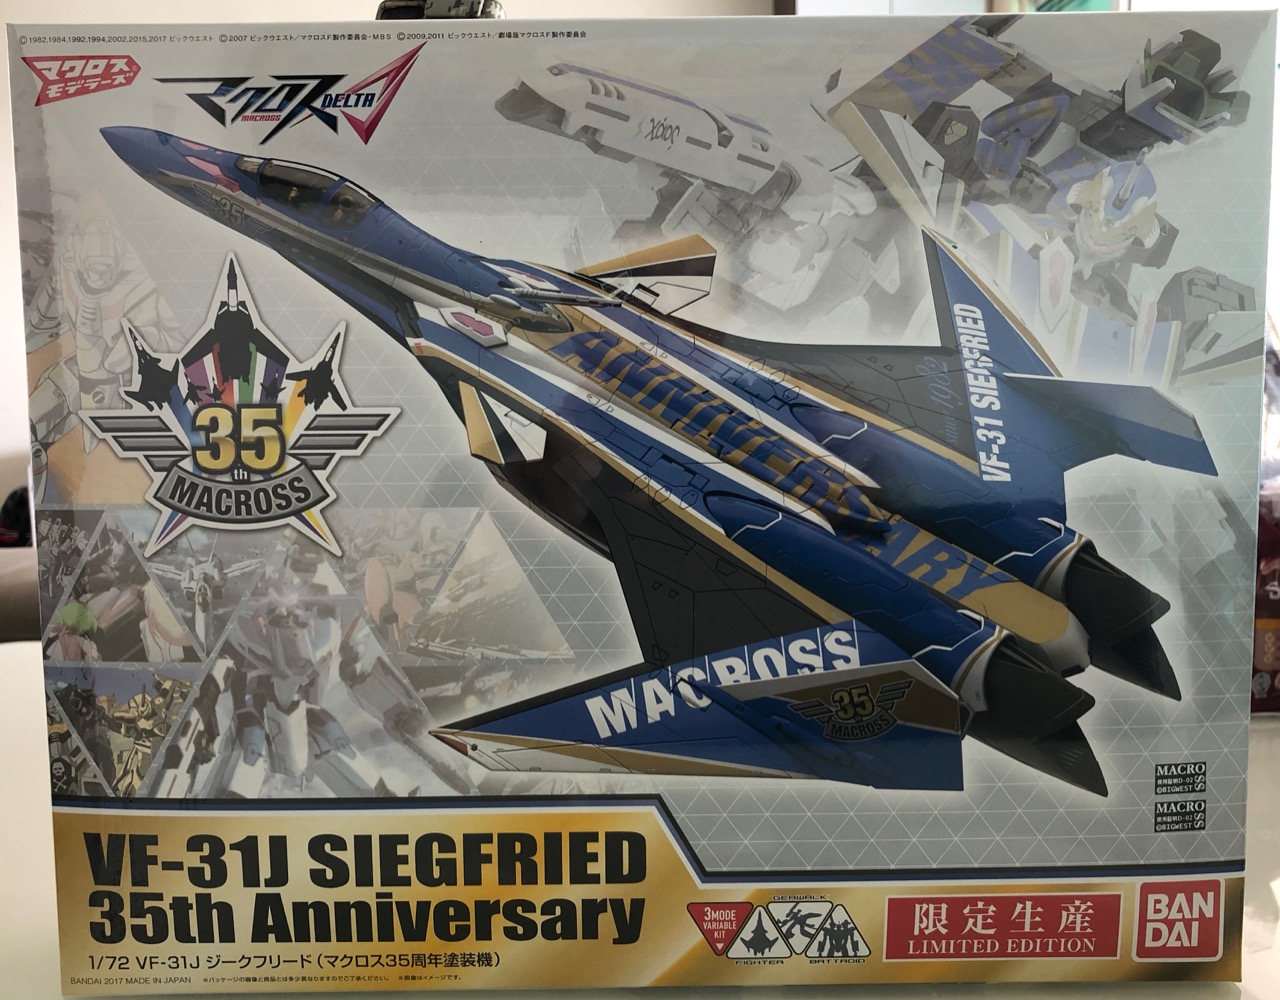 Alteregoistic - Toy Blogger: Macross 35th Anniversary VF-31J Build...